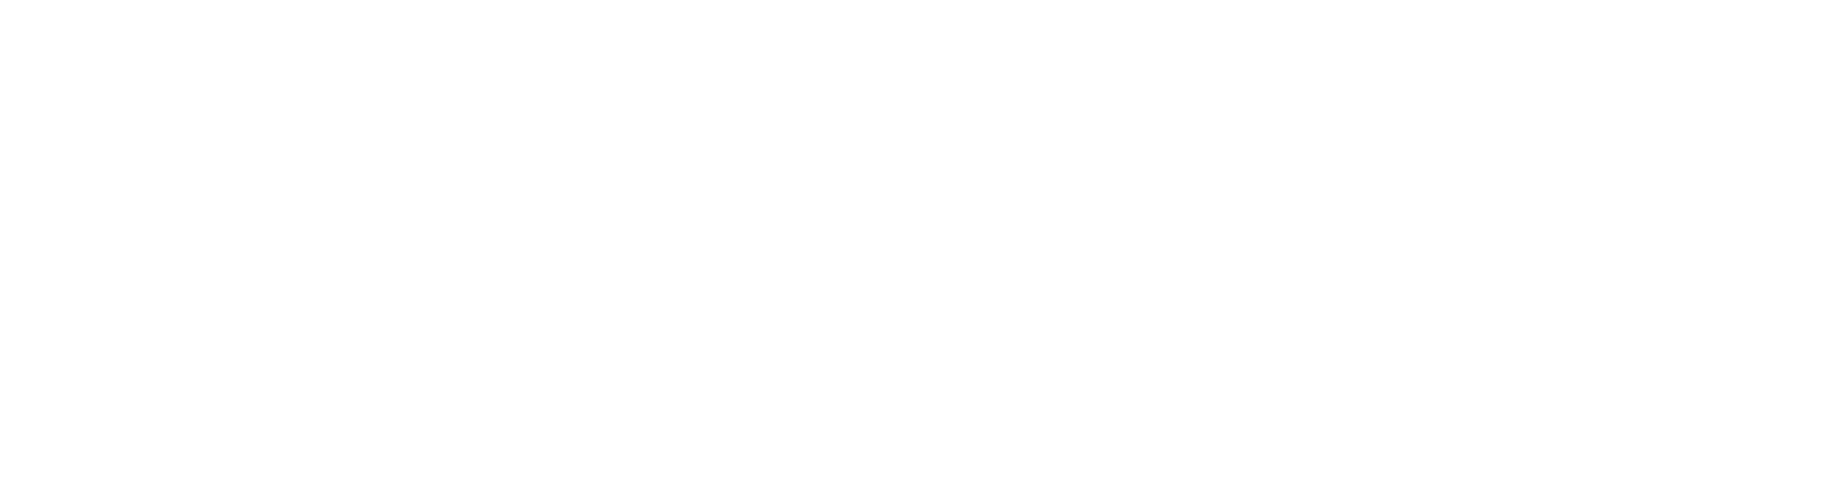 edoc logo weiss